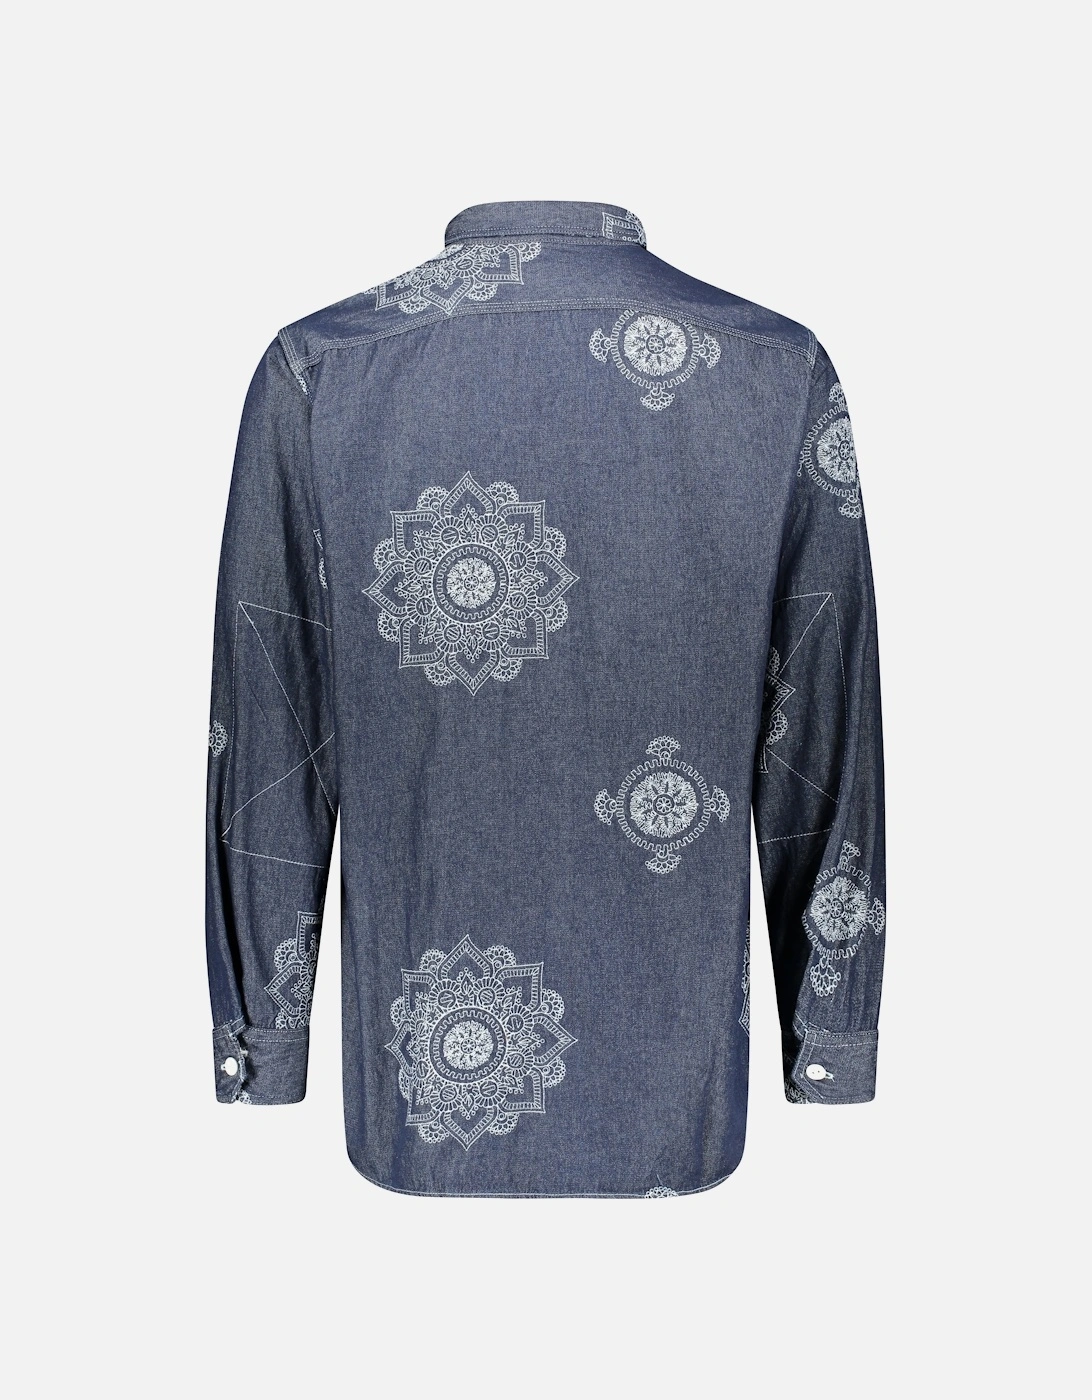 Floral Crest Embroidered Shirt - Indigo